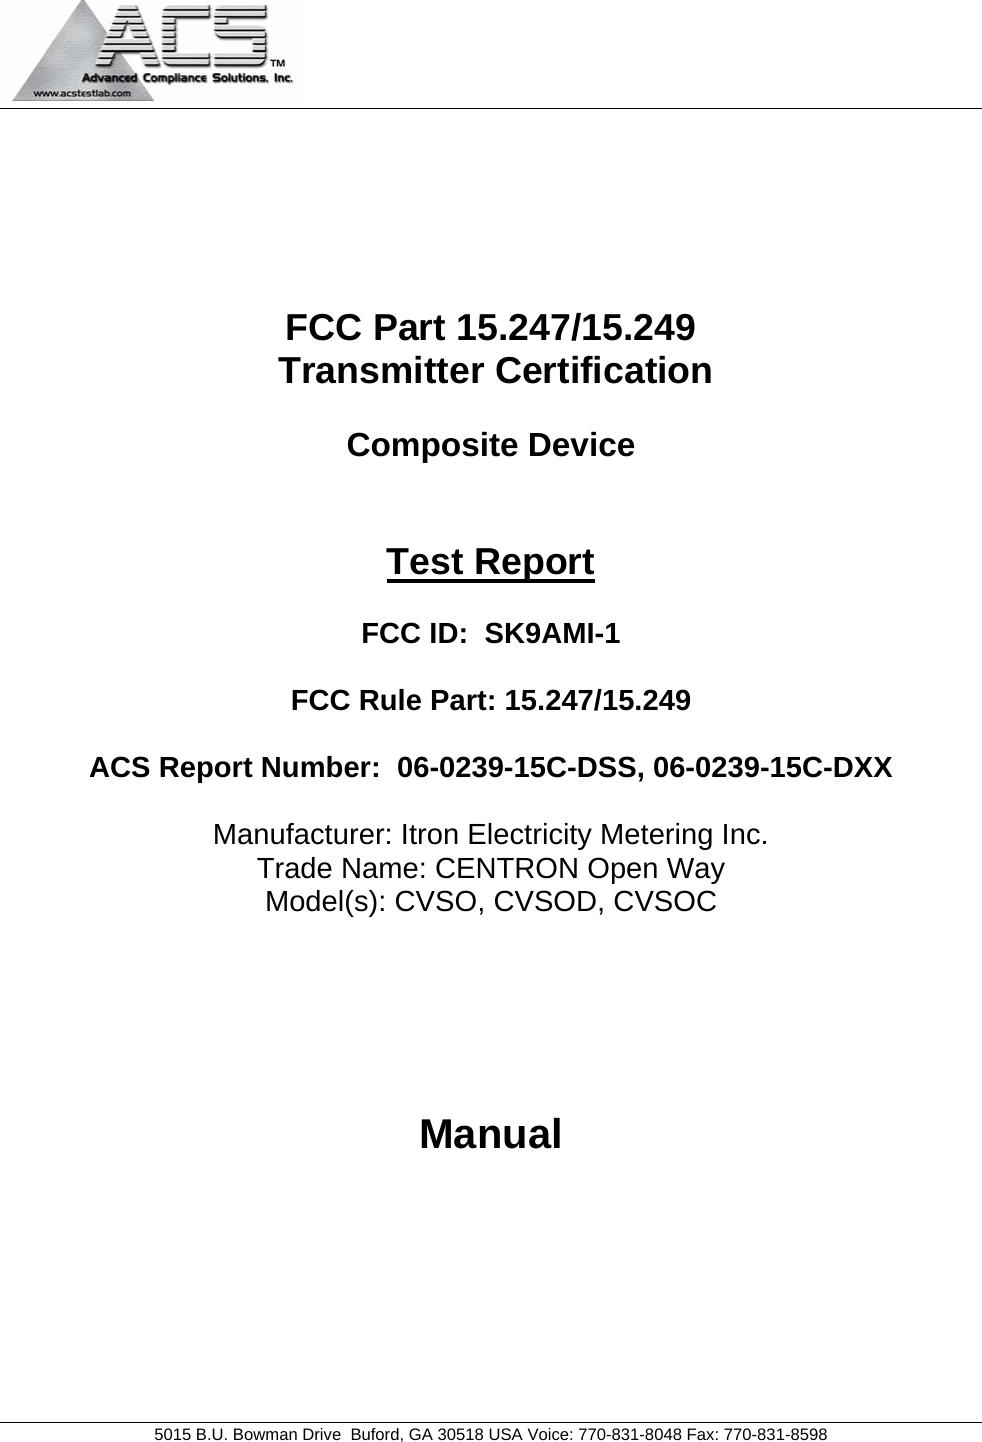                                            5015 B.U. Bowman Drive  Buford, GA 30518 USA Voice: 770-831-8048 Fax: 770-831-8598       FCC Part 15.247/15.249  Transmitter Certification  Composite Device   Test Report  FCC ID:  SK9AMI-1   FCC Rule Part: 15.247/15.249  ACS Report Number:  06-0239-15C-DSS, 06-0239-15C-DXX   Manufacturer: Itron Electricity Metering Inc. Trade Name: CENTRON Open Way Model(s): CVSO, CVSOD, CVSOC                       Manual  